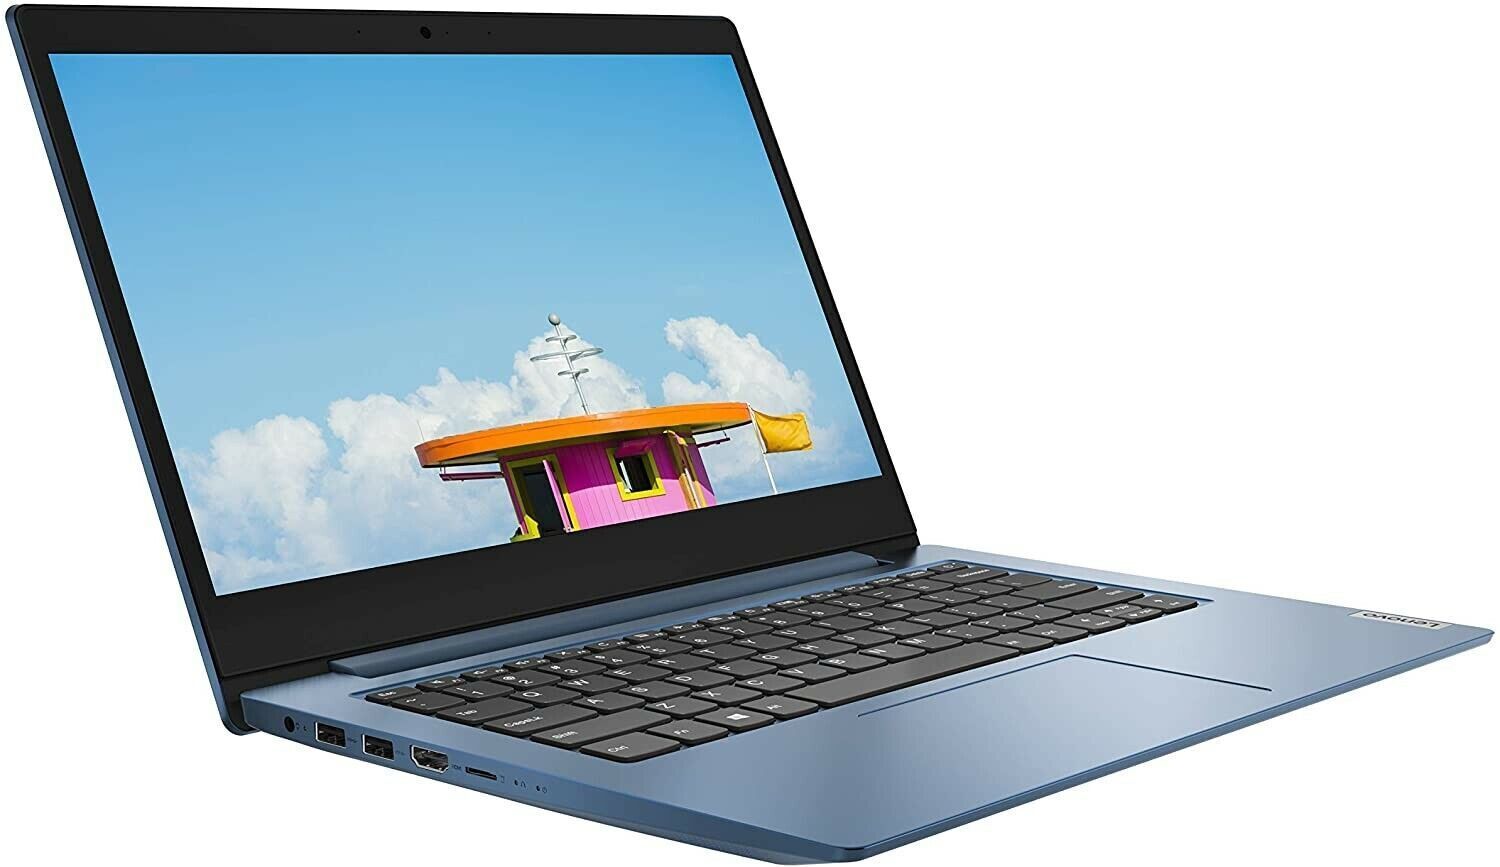 Weinig Conserveermiddel Agressief Lenovo IdeaPad 1 14IGL05 14 inch (128GB, Intel Pentium, 1.10GHz, 4GB)  Notebook/Laptop - Ice Blue - 81VU000JUS for sale online | eBay